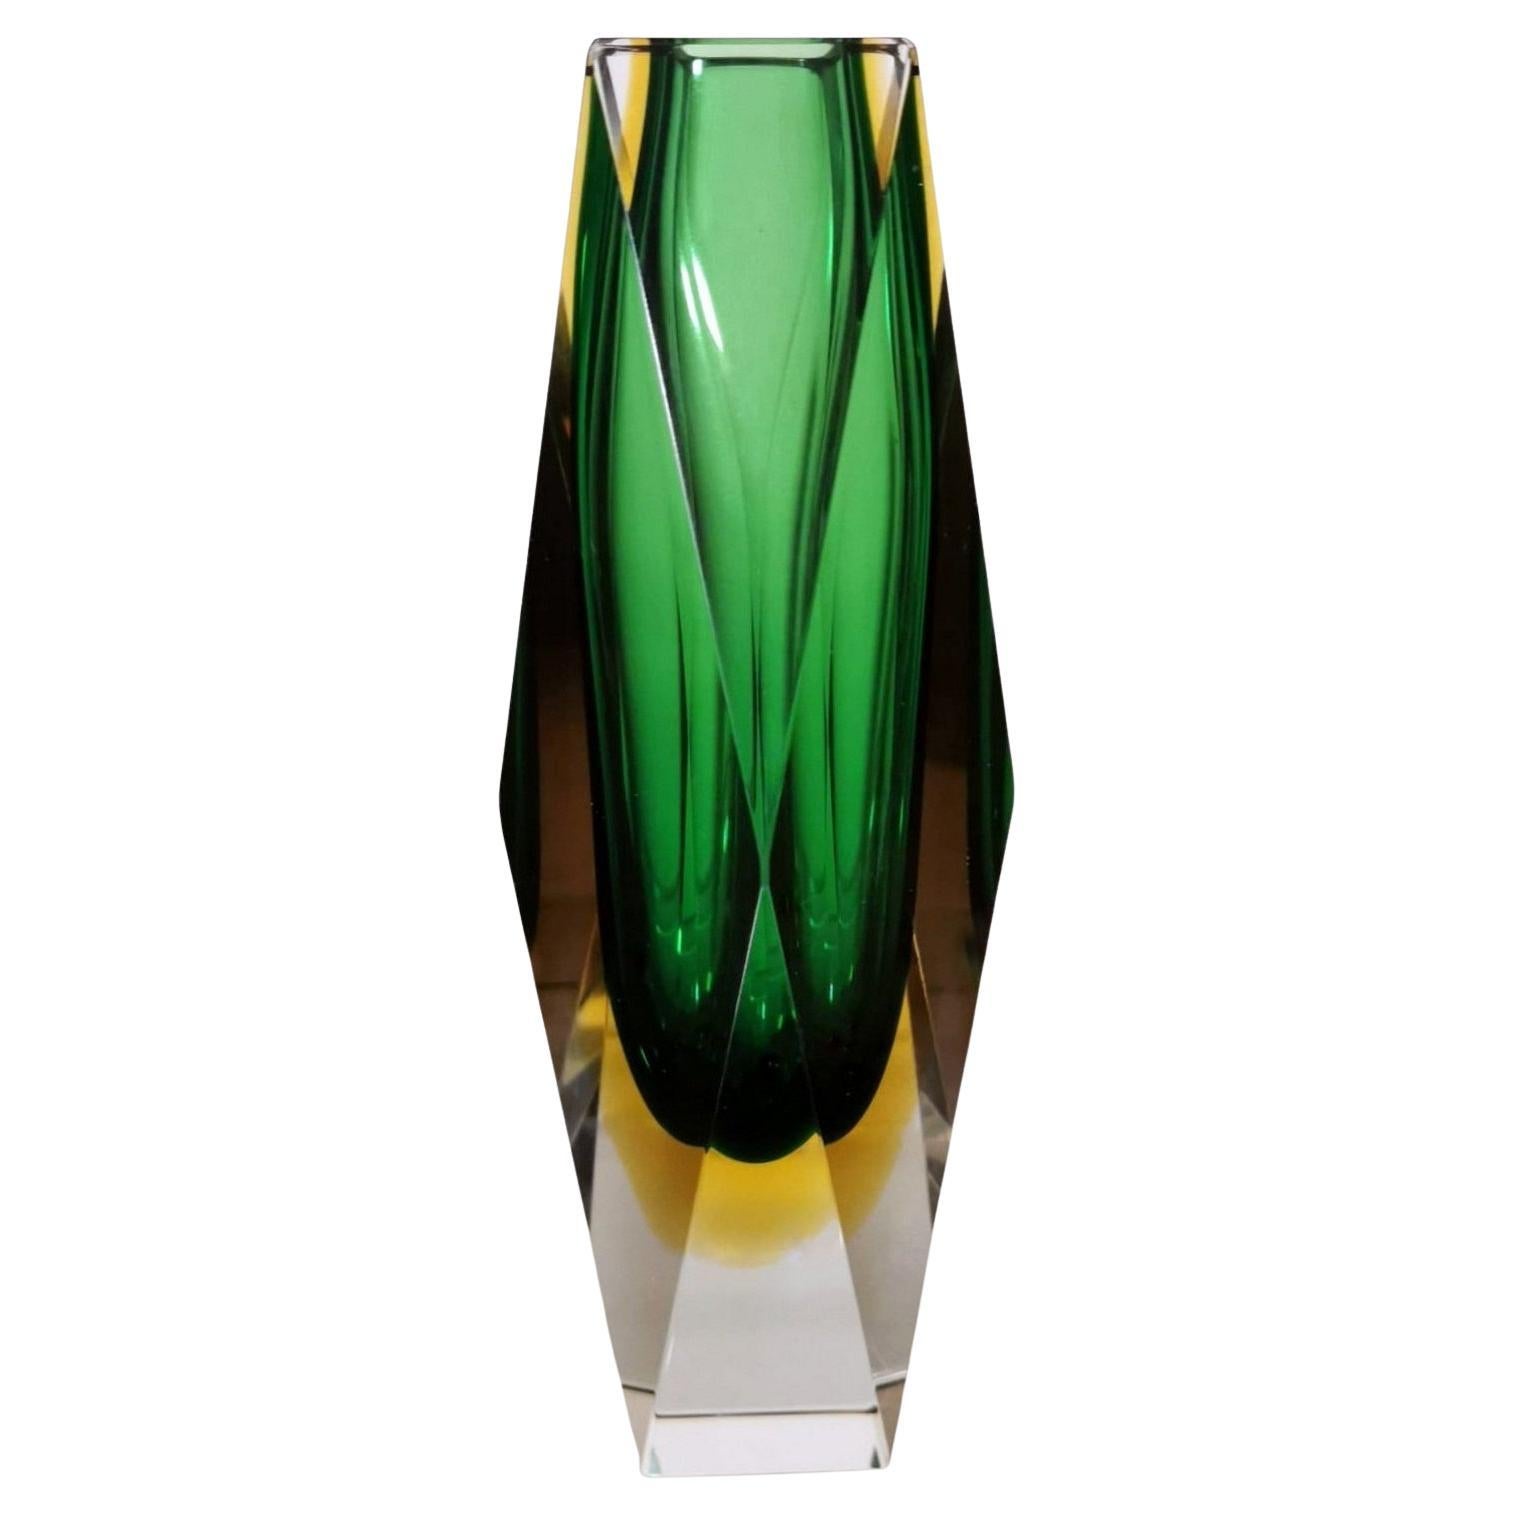 Mandruzzato Murano Glass Vase "Sommerso" Colored and Faceted